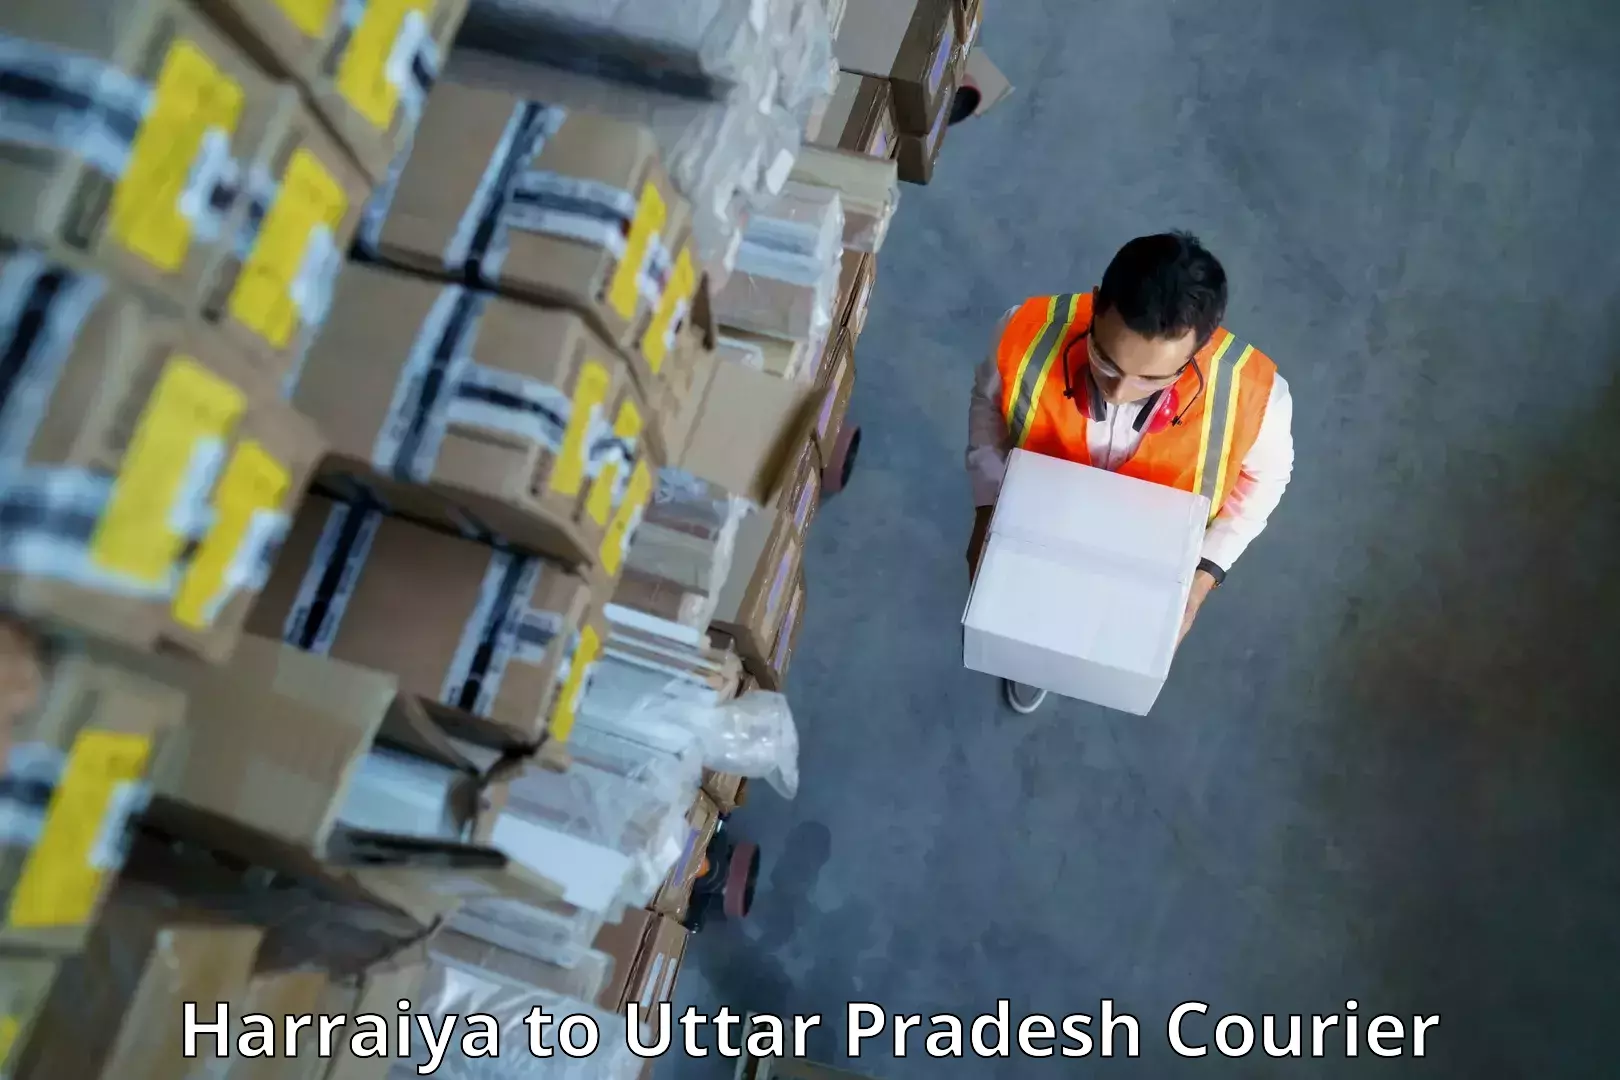 International courier networks Harraiya to Uttar Pradesh